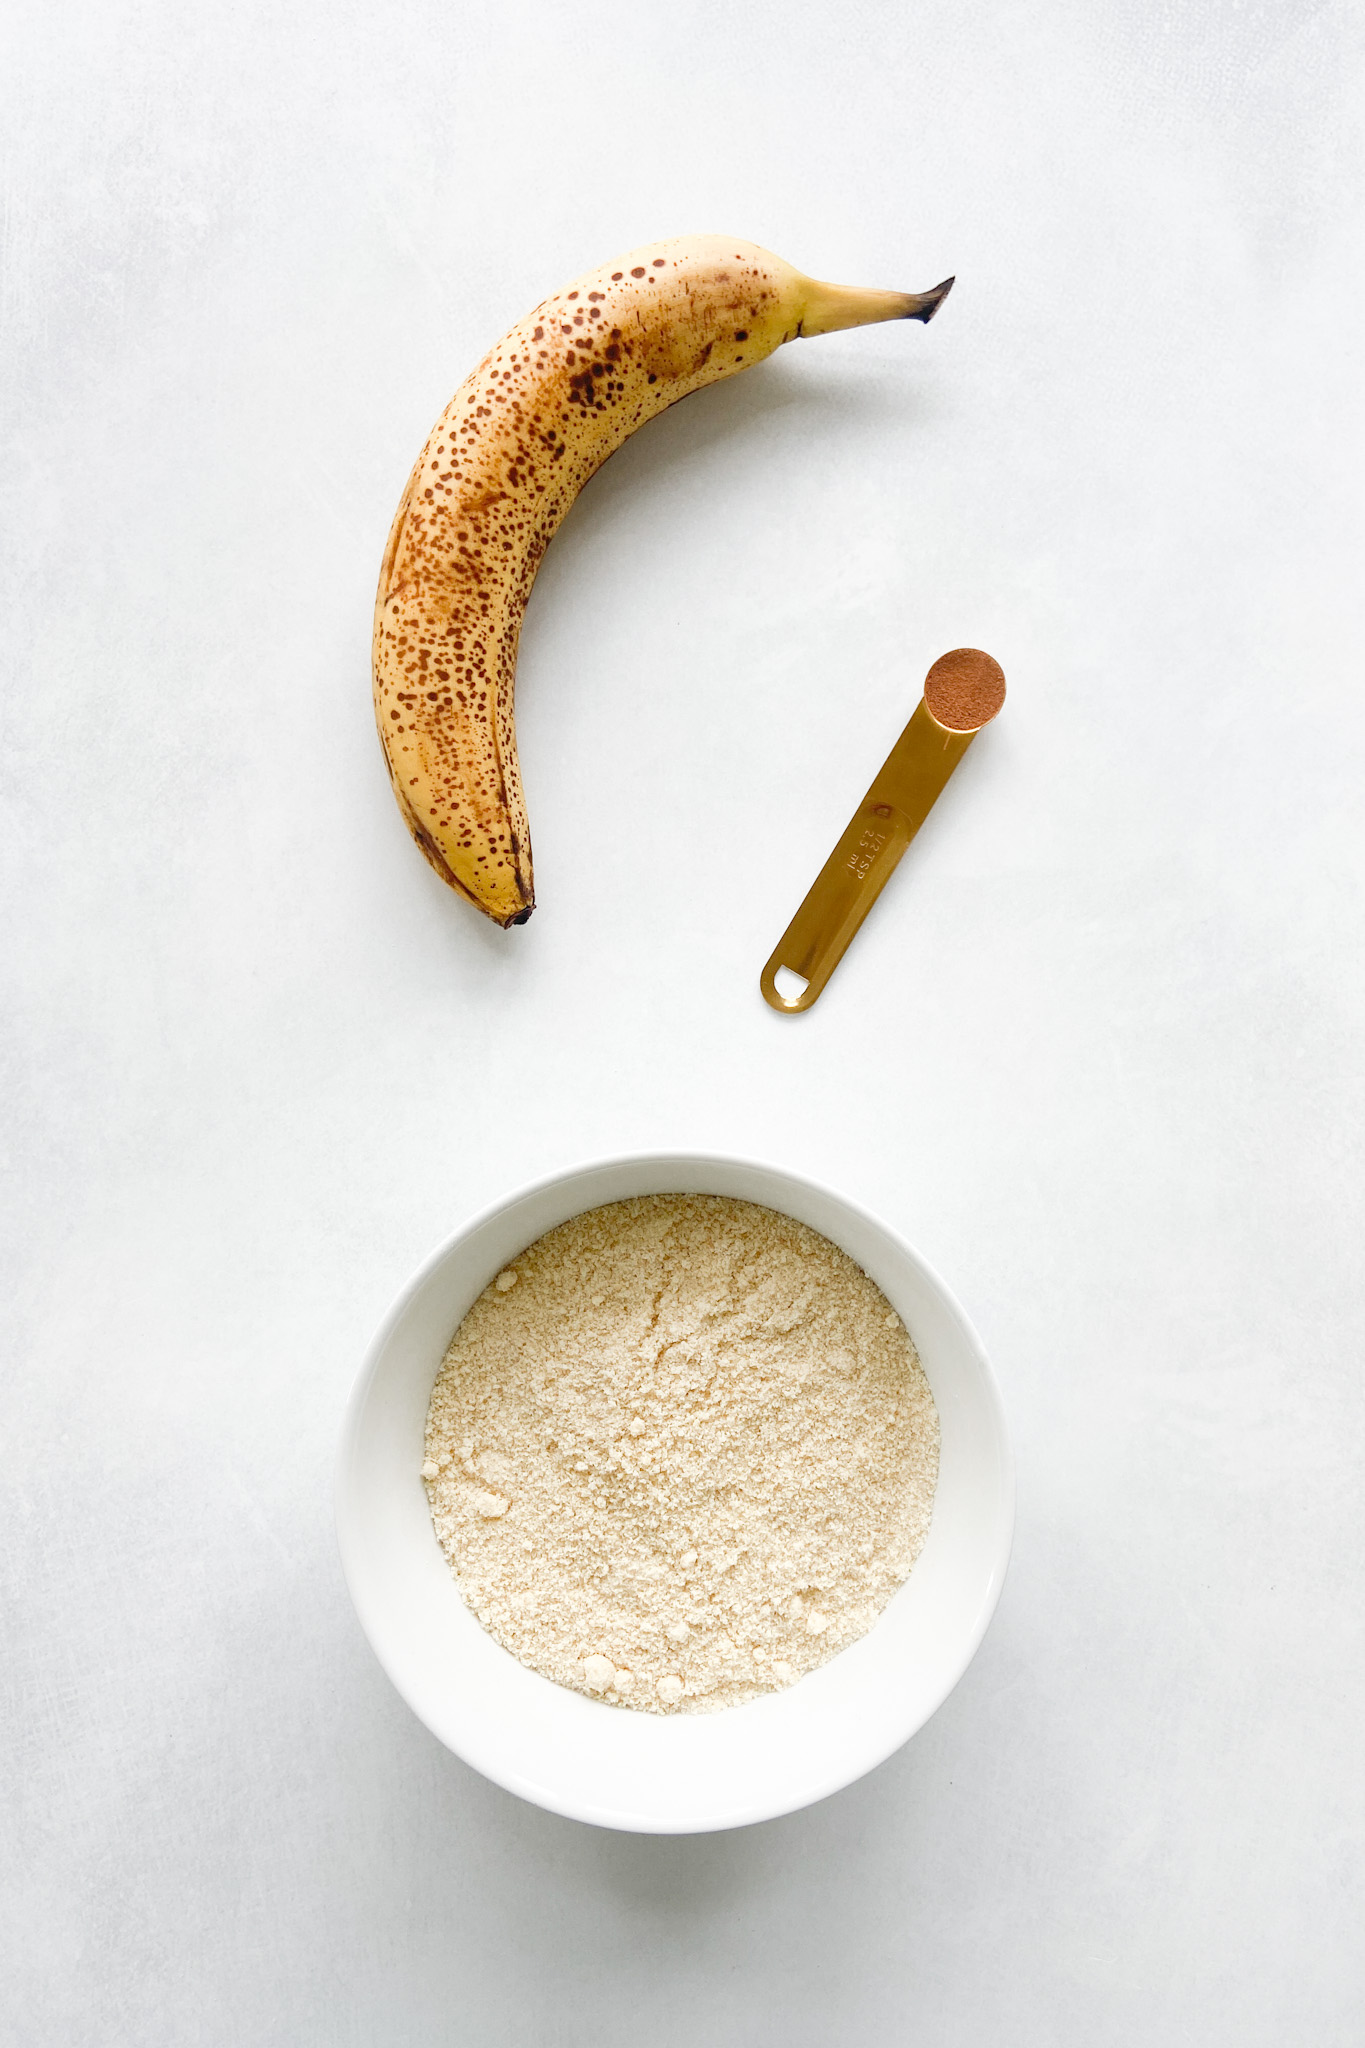 Ingredients to make almond banana cookies